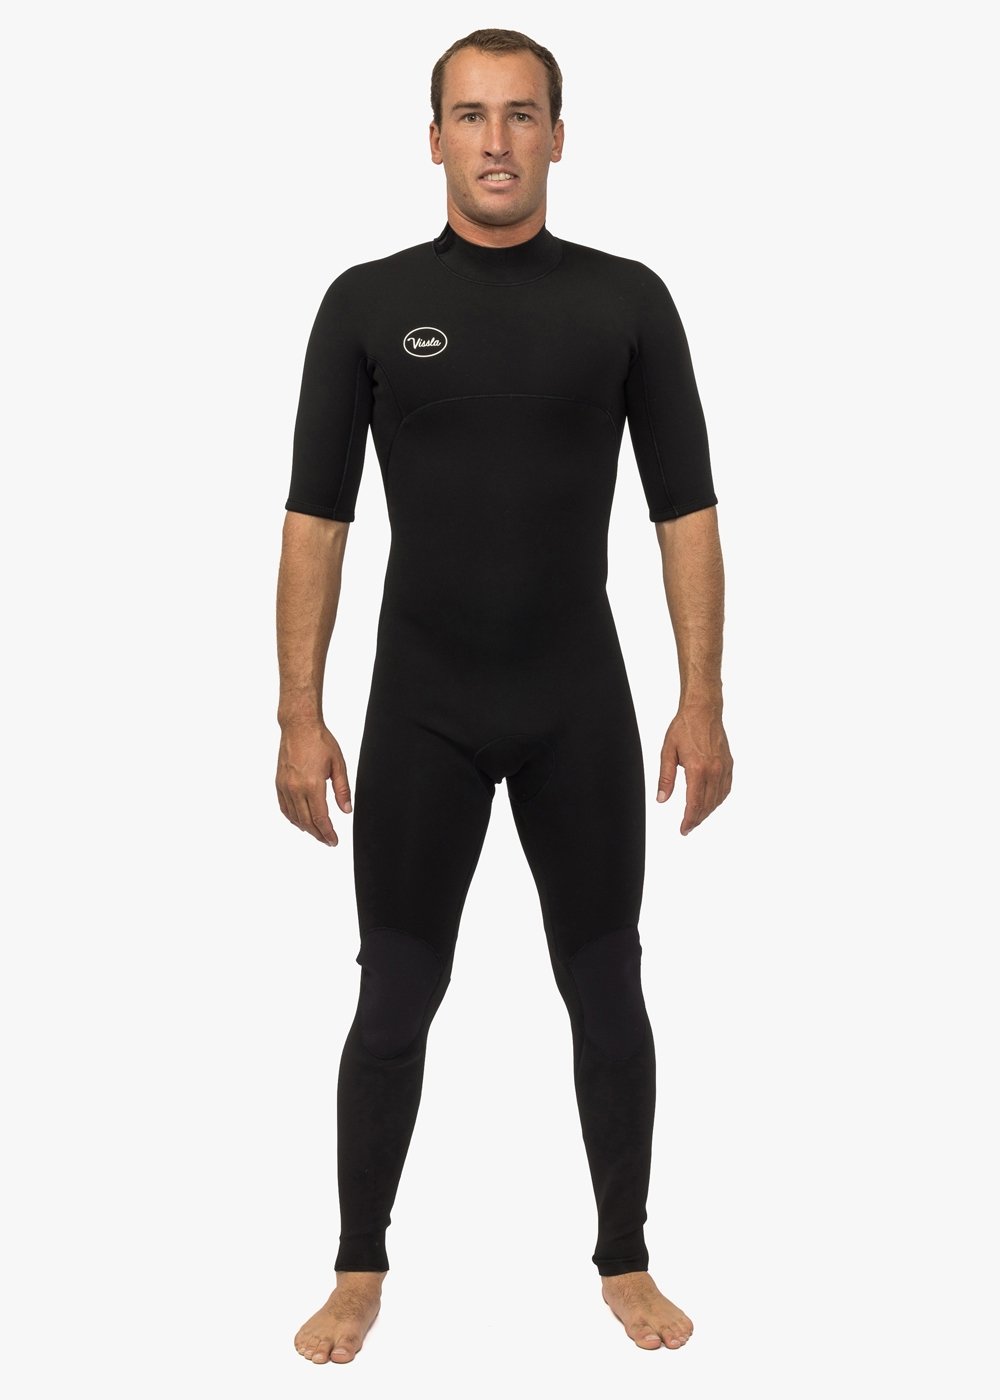 7 Seas 2-2 Short Sleeve Back Zip Wetsuit, BLK